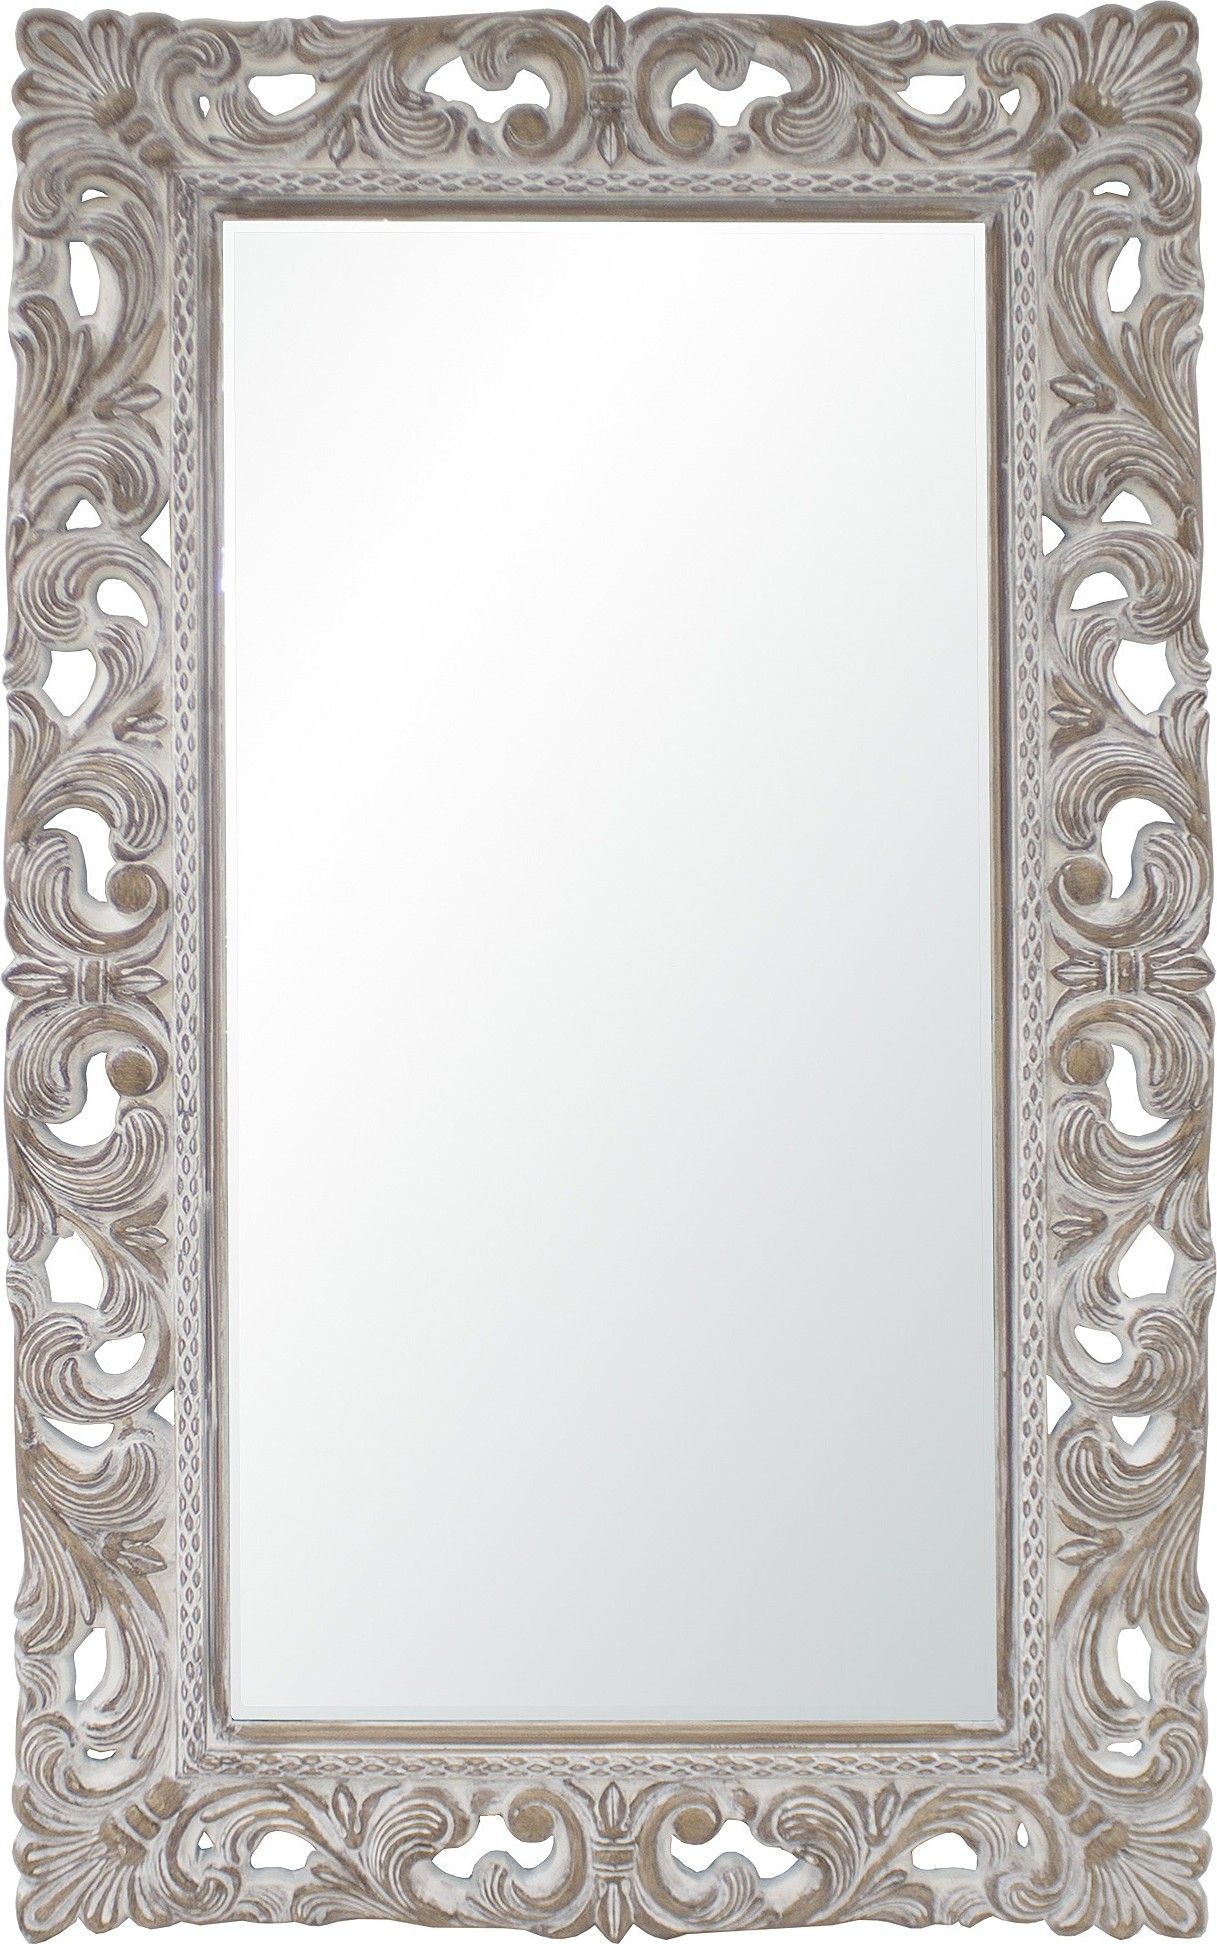 Zrcadlo s ornamenty 120500 Mdum - M DUM.cz